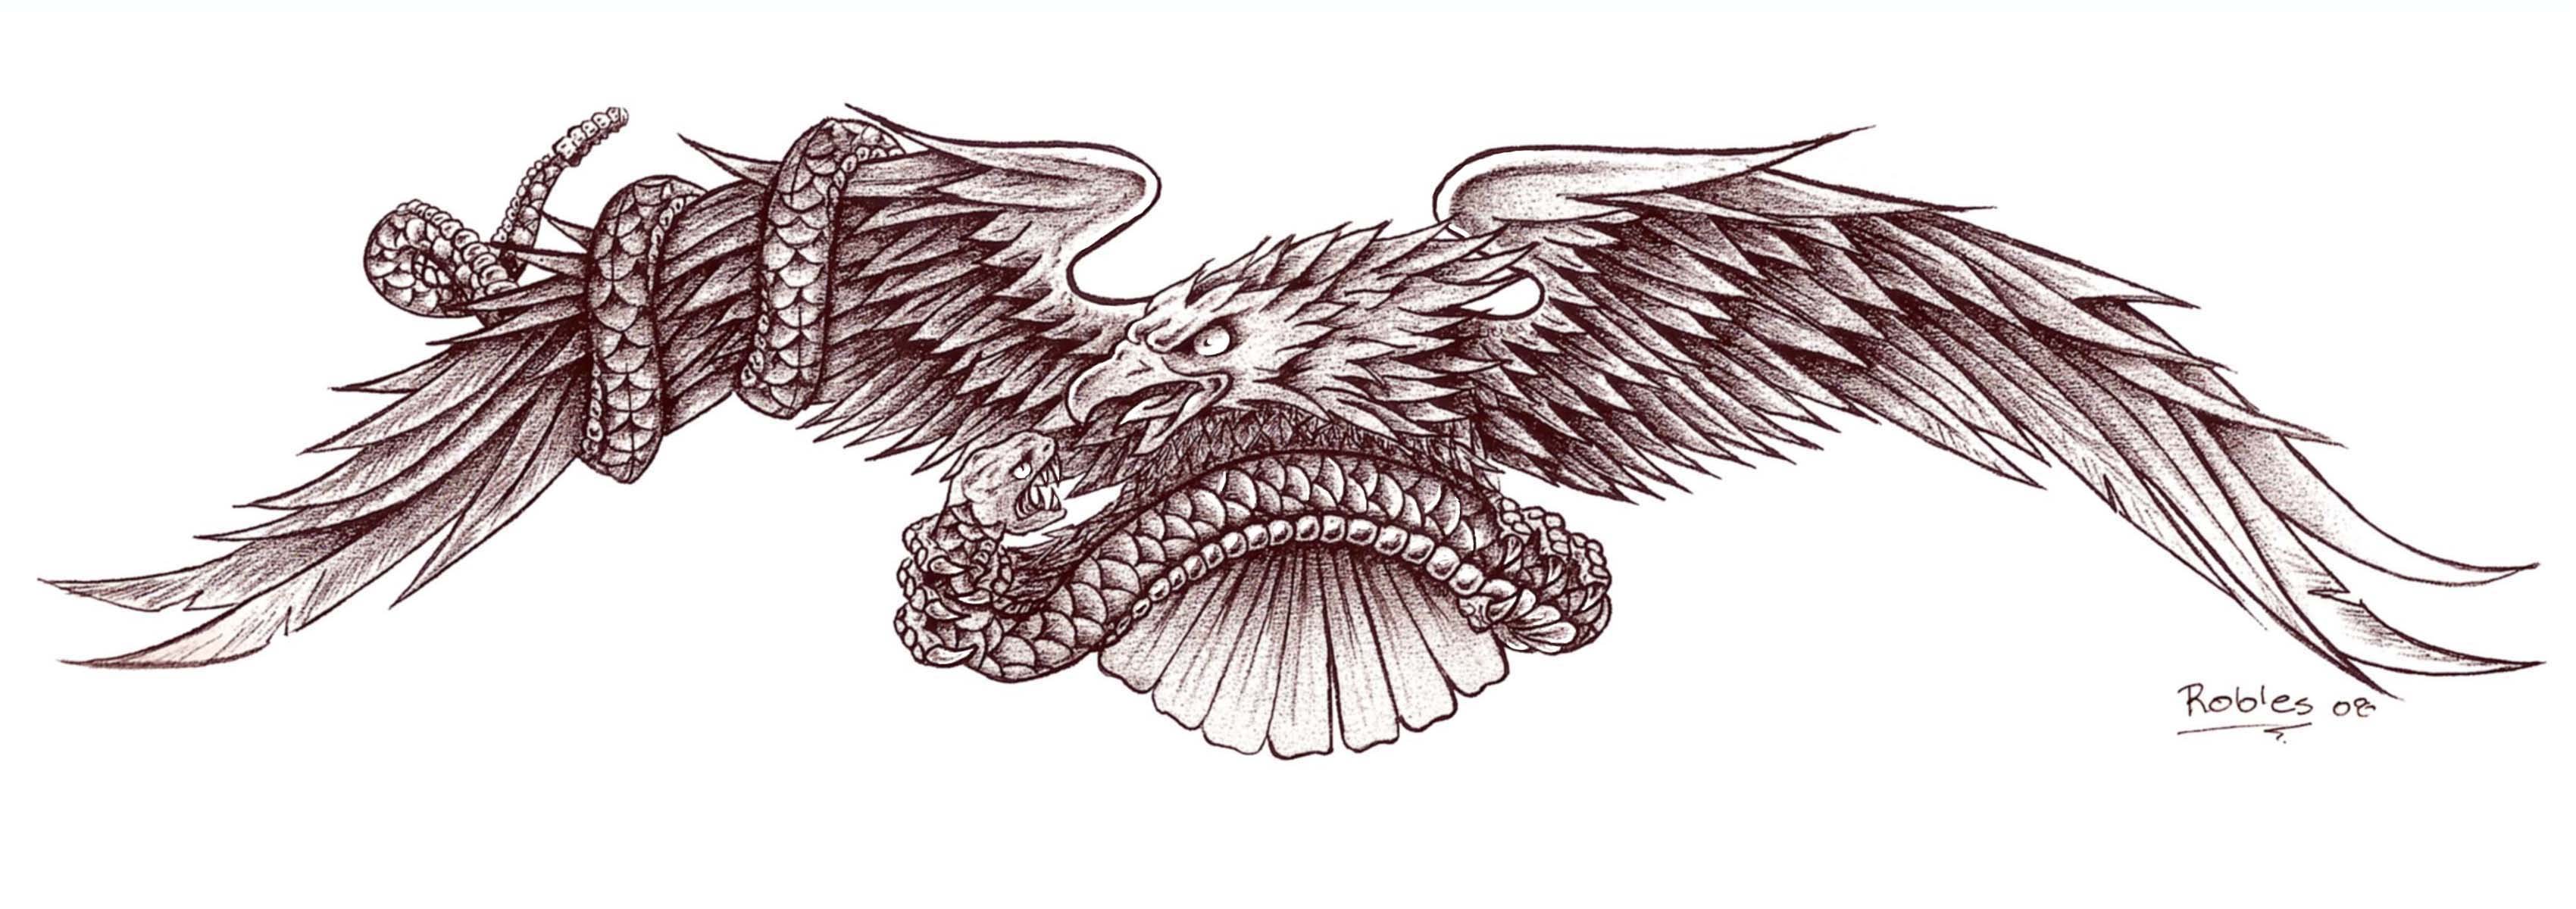 Amazing Black & Grey Ink Eagle & Snake Tattoo Design For Chest Or Back